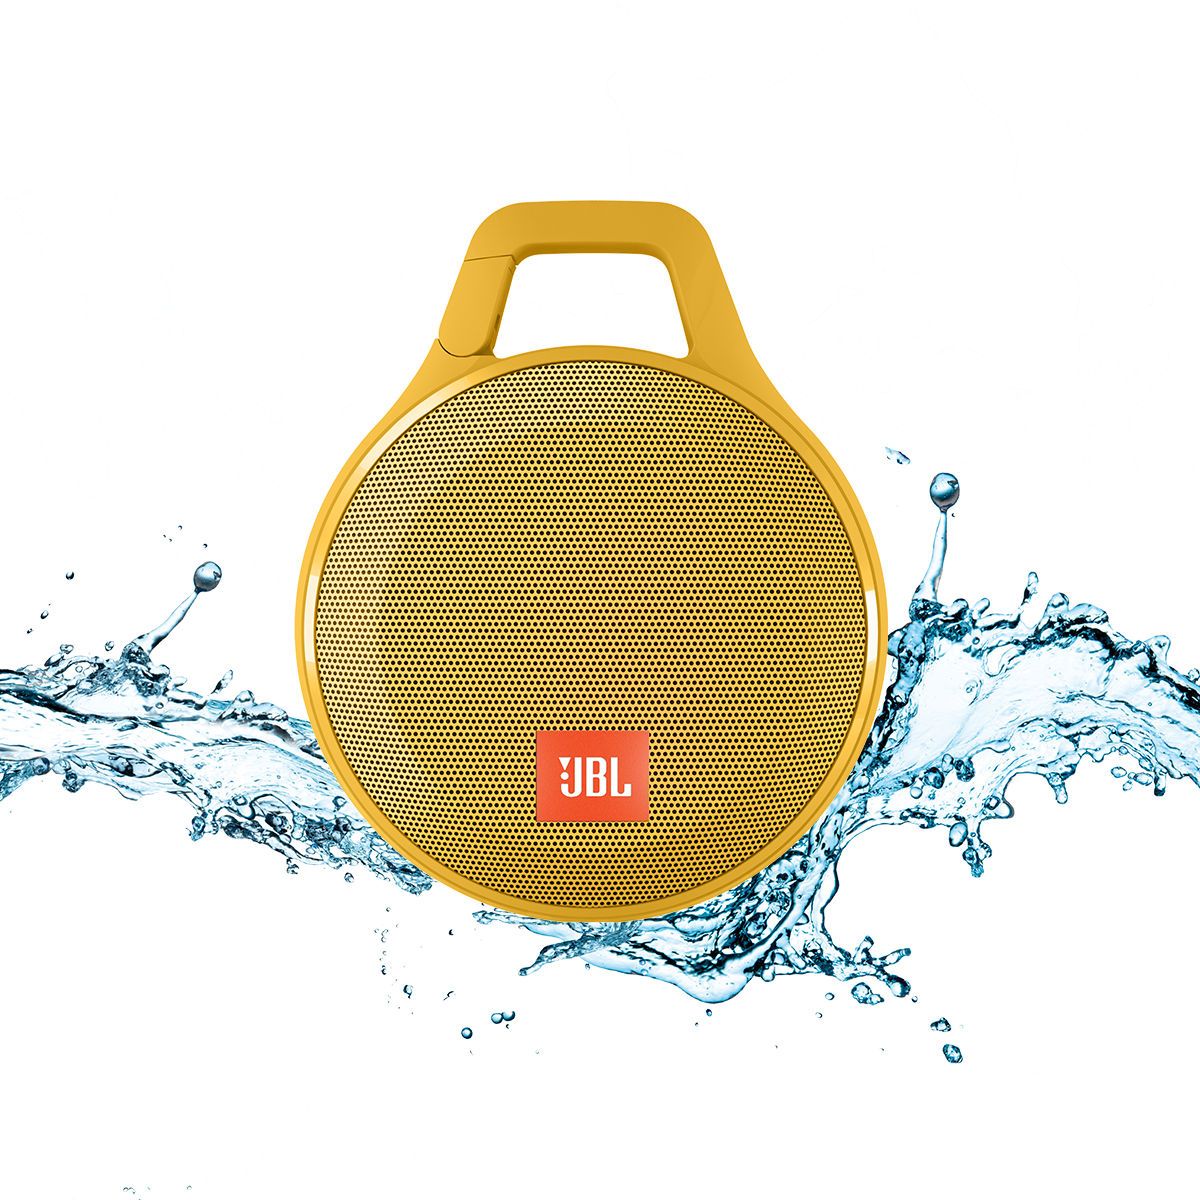 JBL Clip+ Parlante portátil resistente al agua amarillo